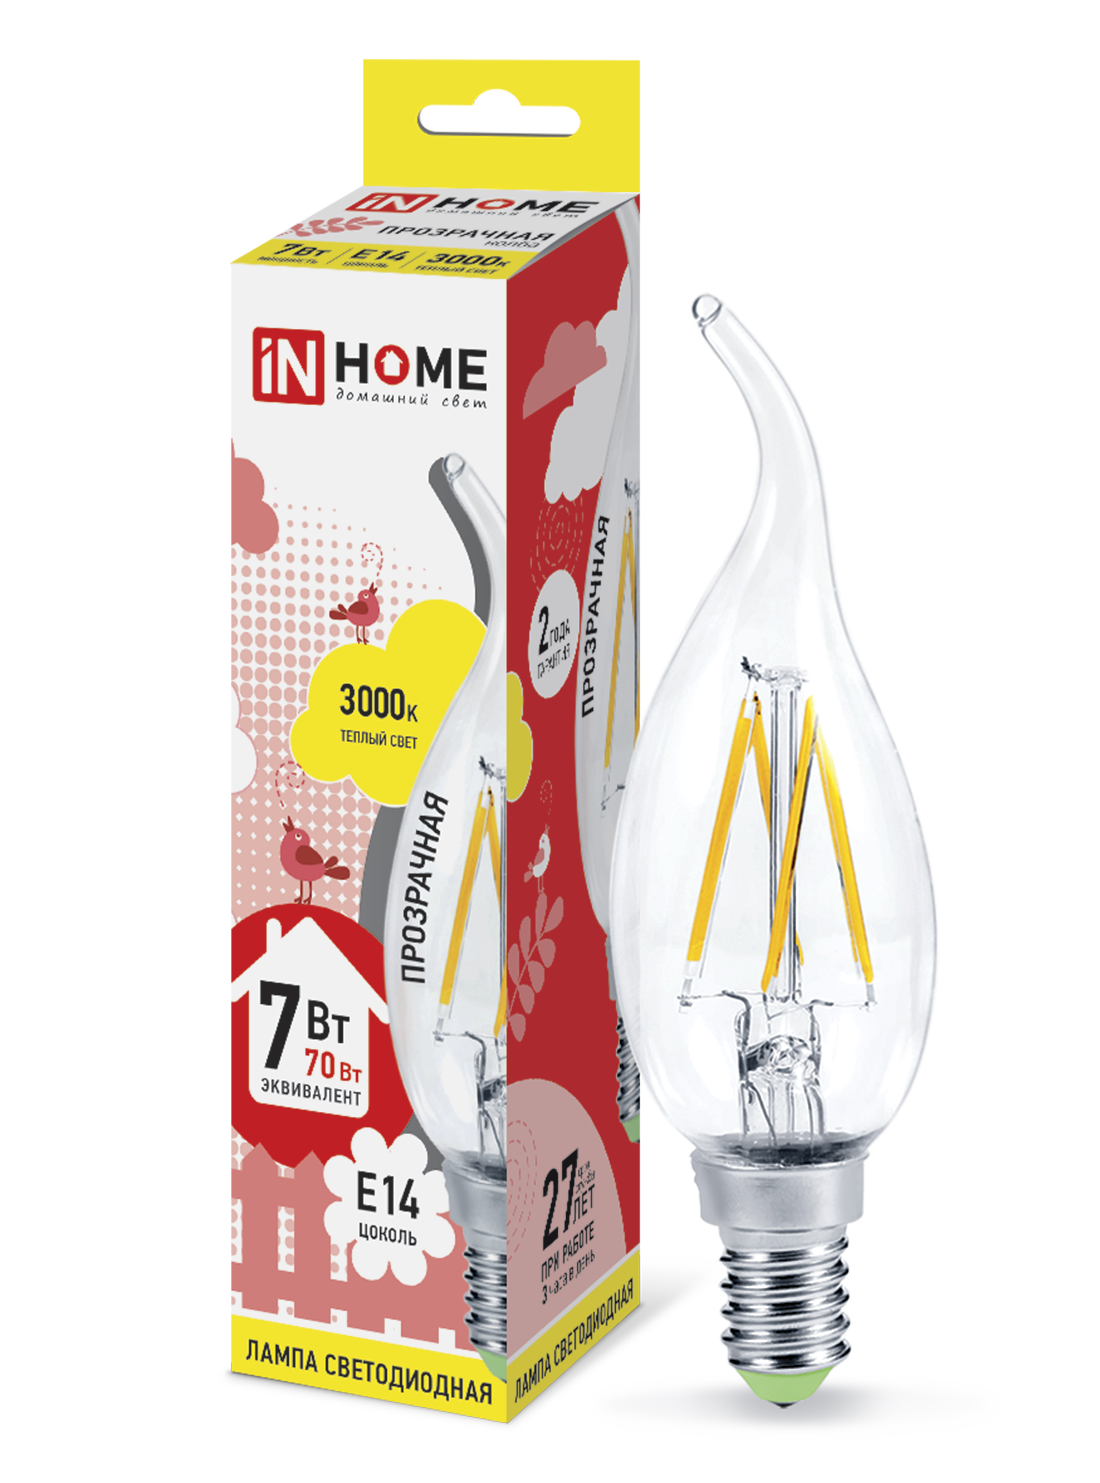 Купить лампа светодиодная led-свеча на ветру-deco 7вт 230в е14 3000к 630лм прозрачная in home, 100% качество, в наличии на L-ed.ru